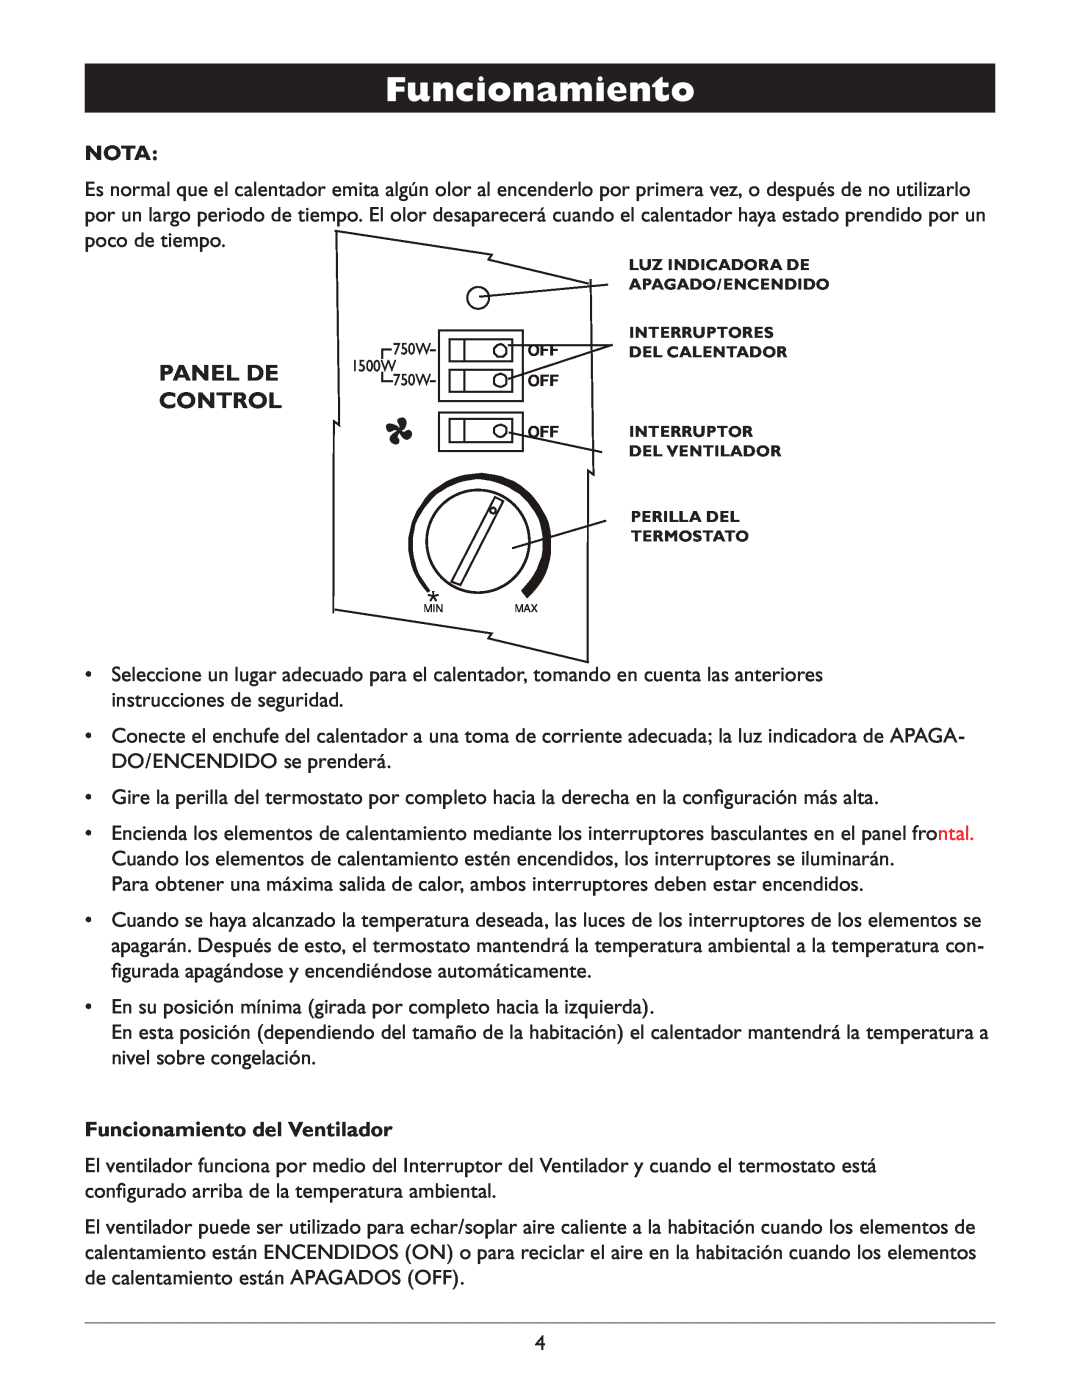 Amcor AMH9 owner manual Panel De Control, Nota, Funcionamiento del Ventilador 